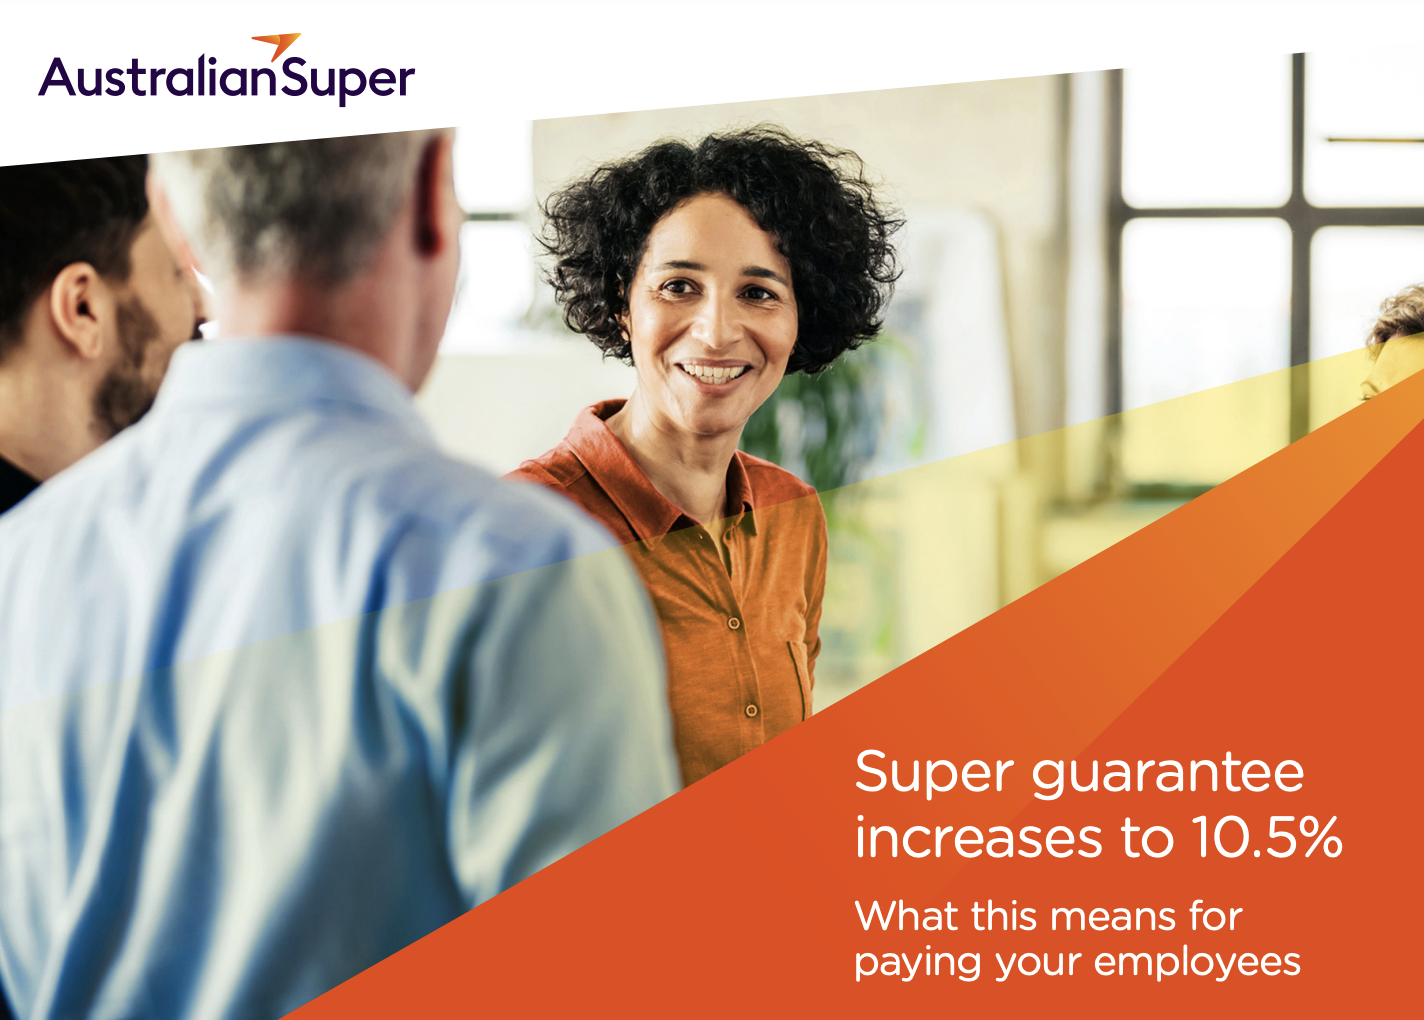 12% super guarantee by 2025 - small increases equal big benefits